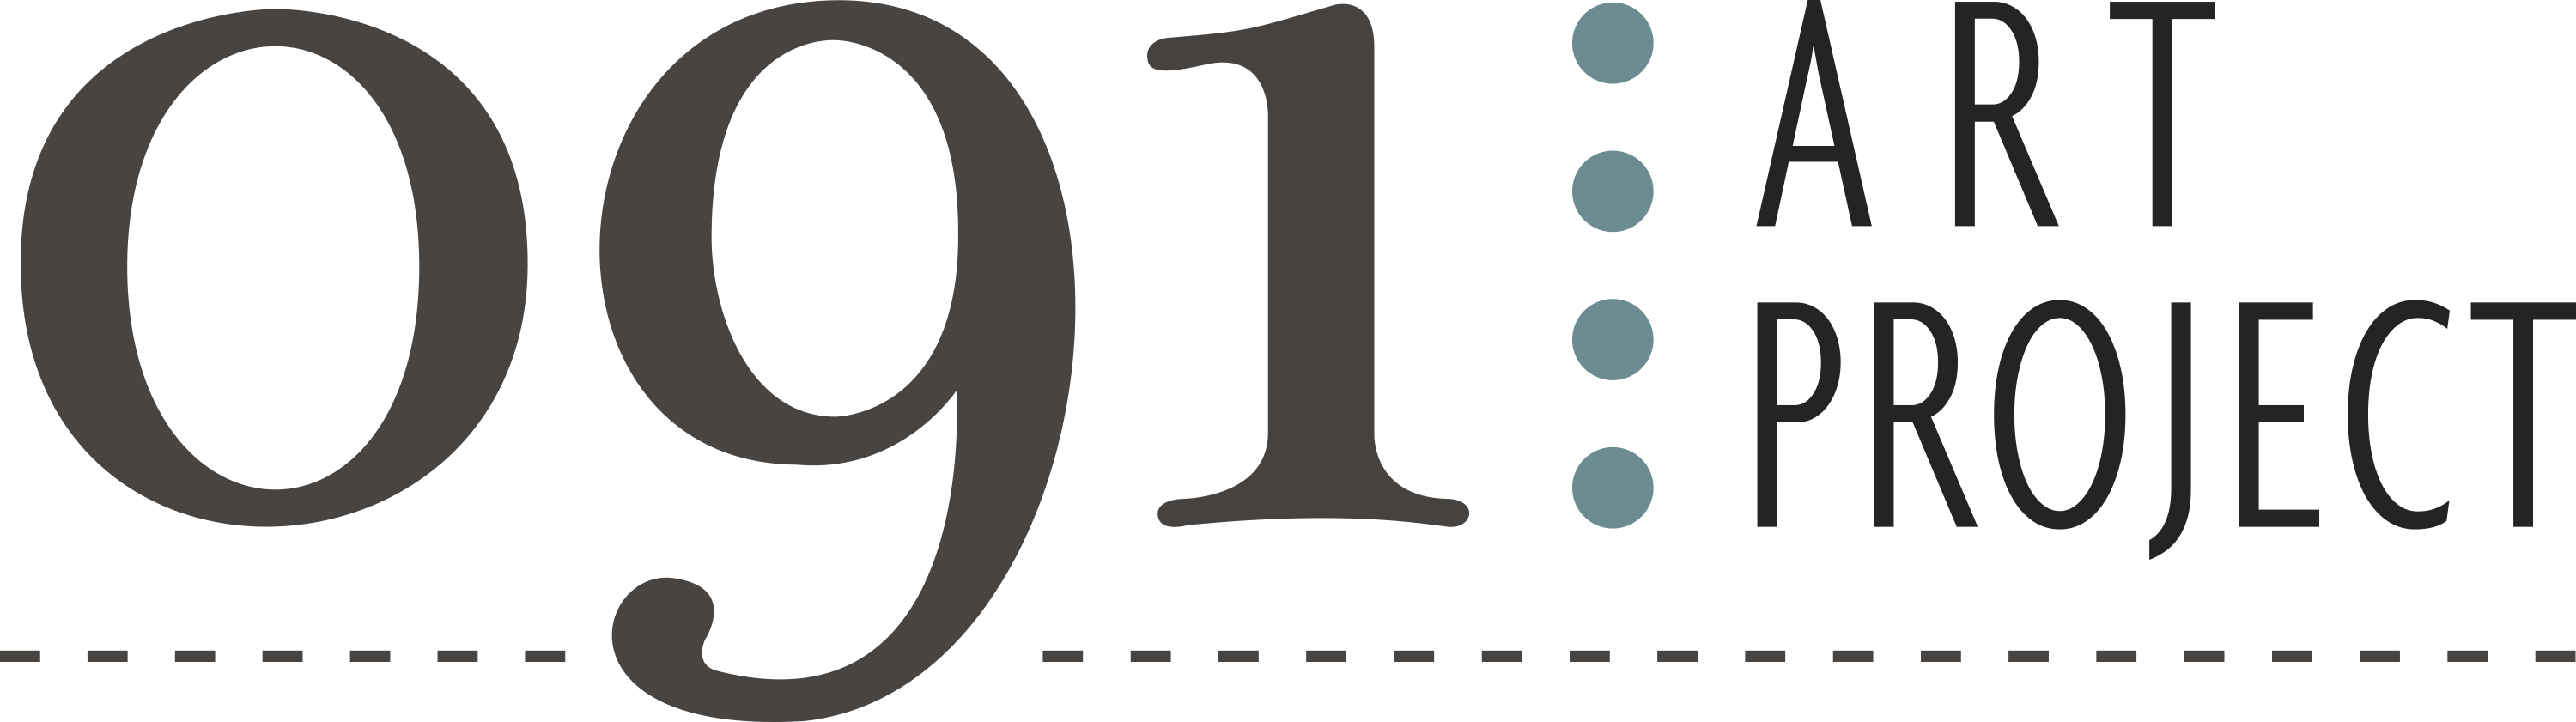 091ArtProject logo